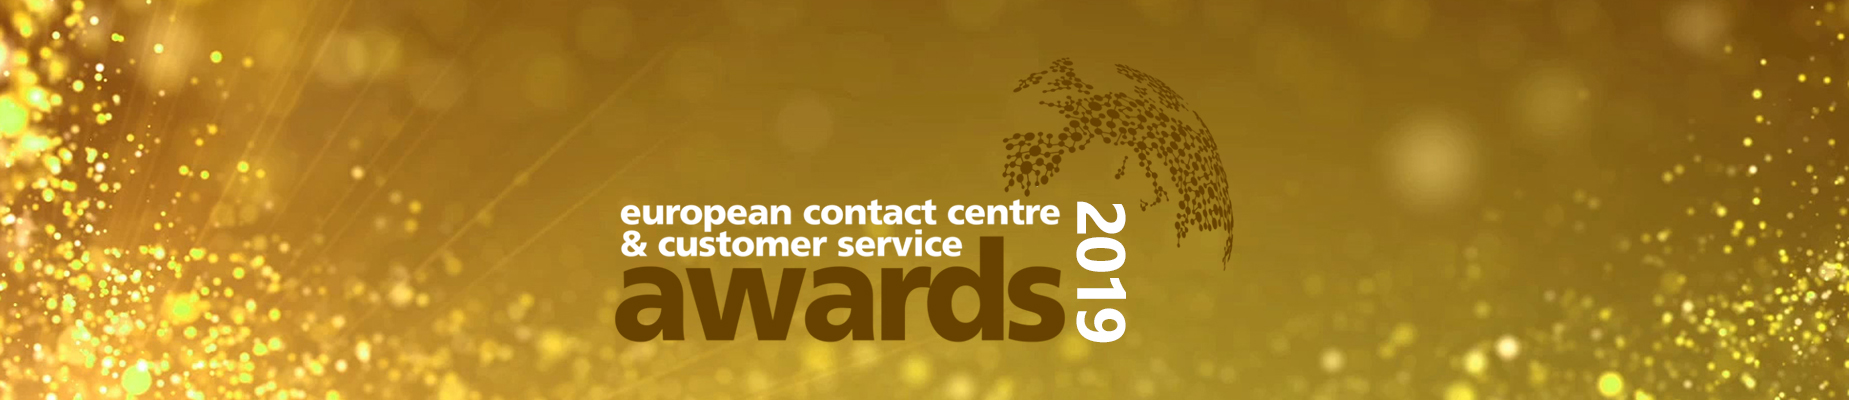 EU Contact Centre & Customer Service Awards